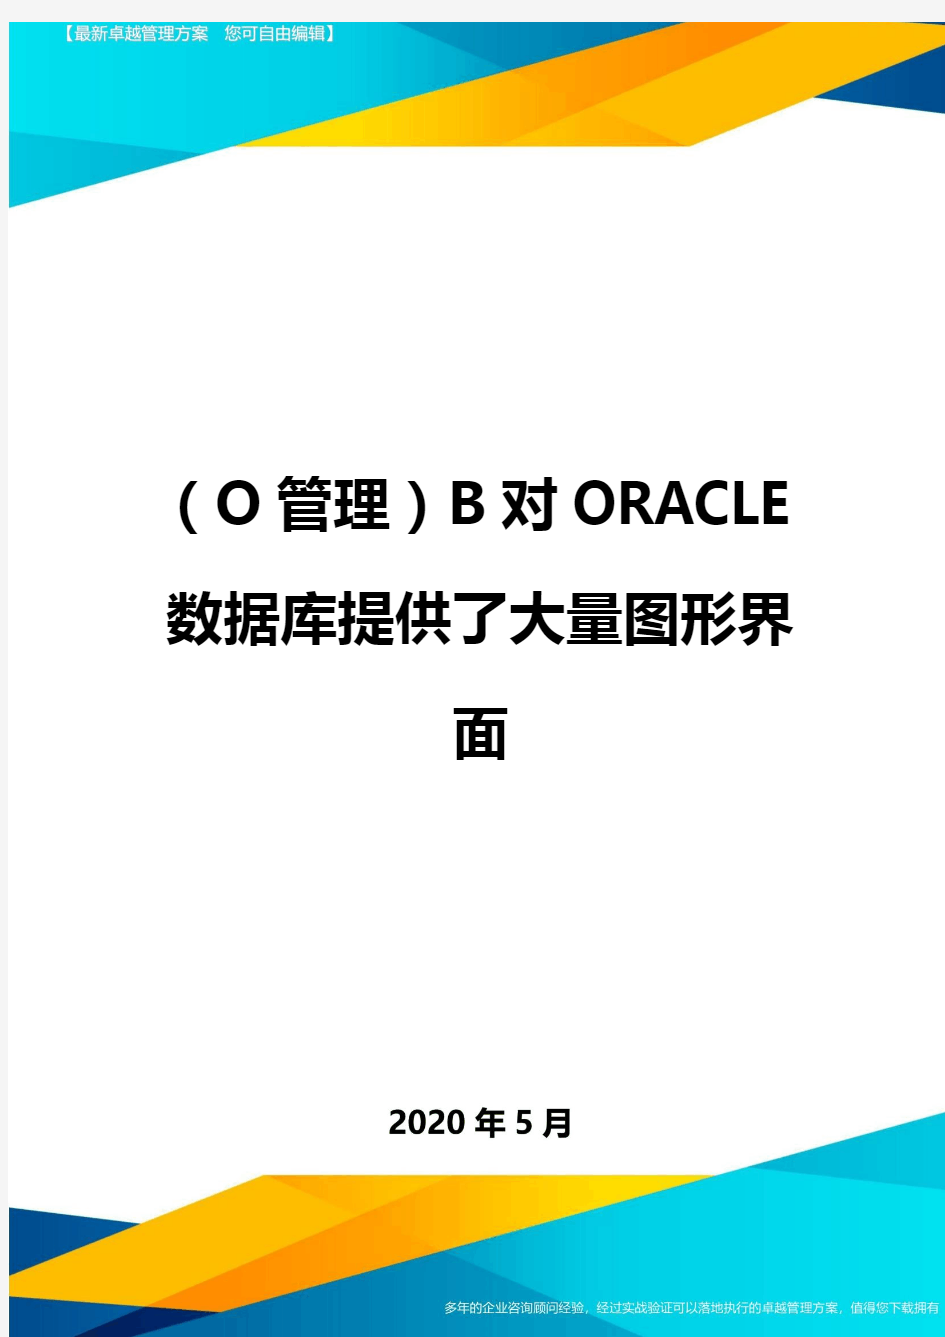 ( O管理)B对ORACLE数据库提供了大量图形界面